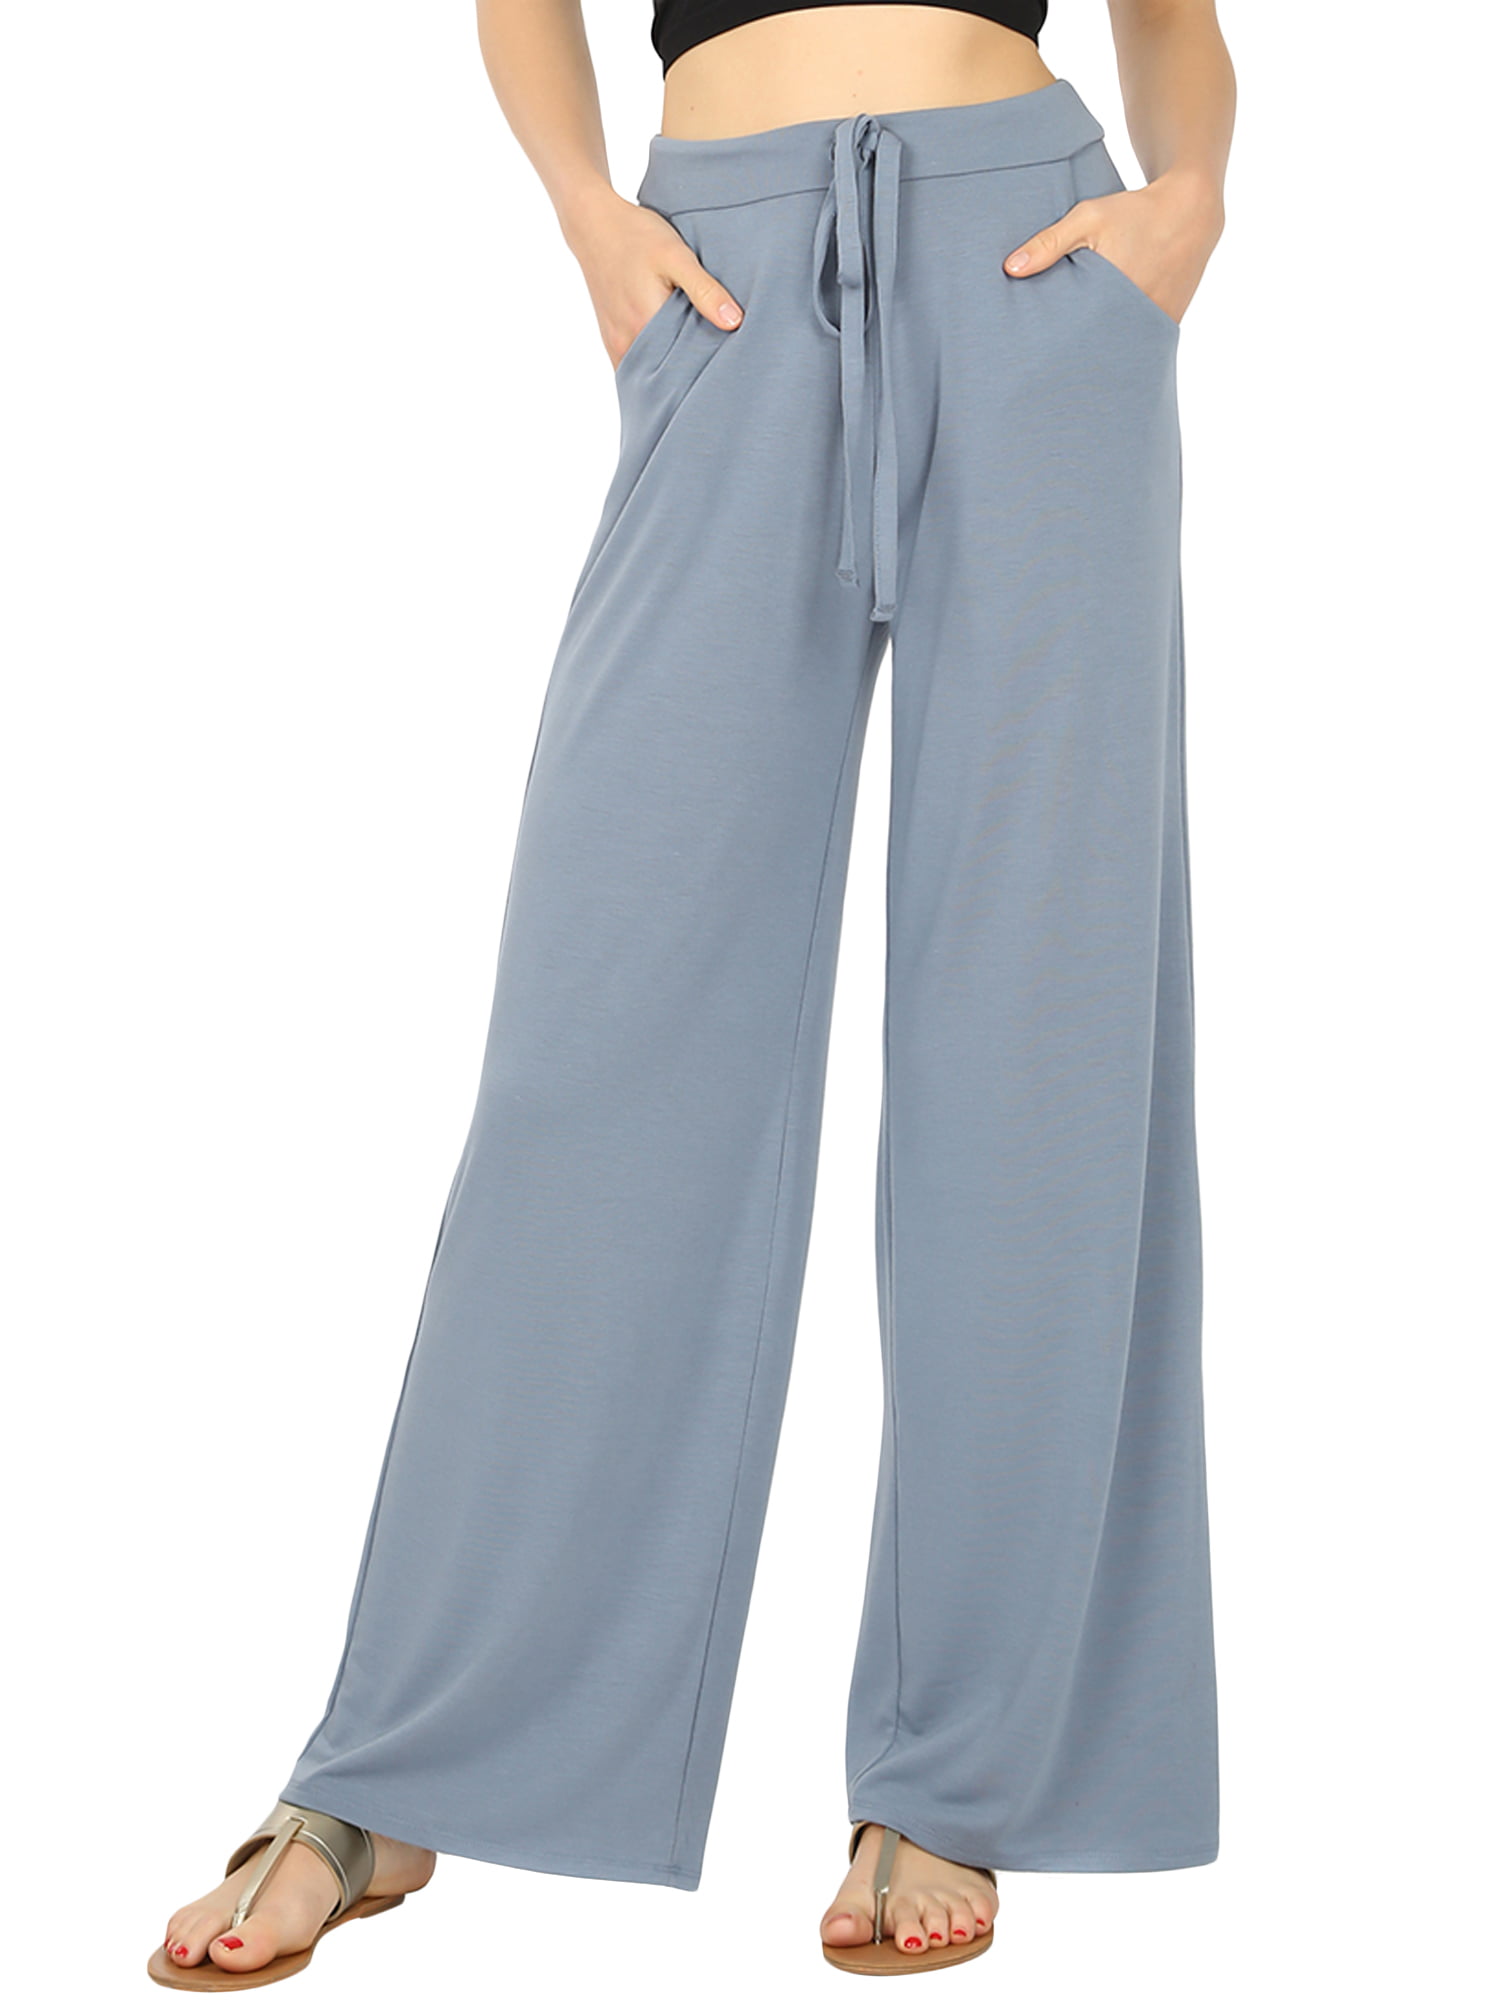 Aifer Women’s Comfy Casual Pajama Pants Floral Print Stretchy Drawstring Wide Leg Lounge Pants 